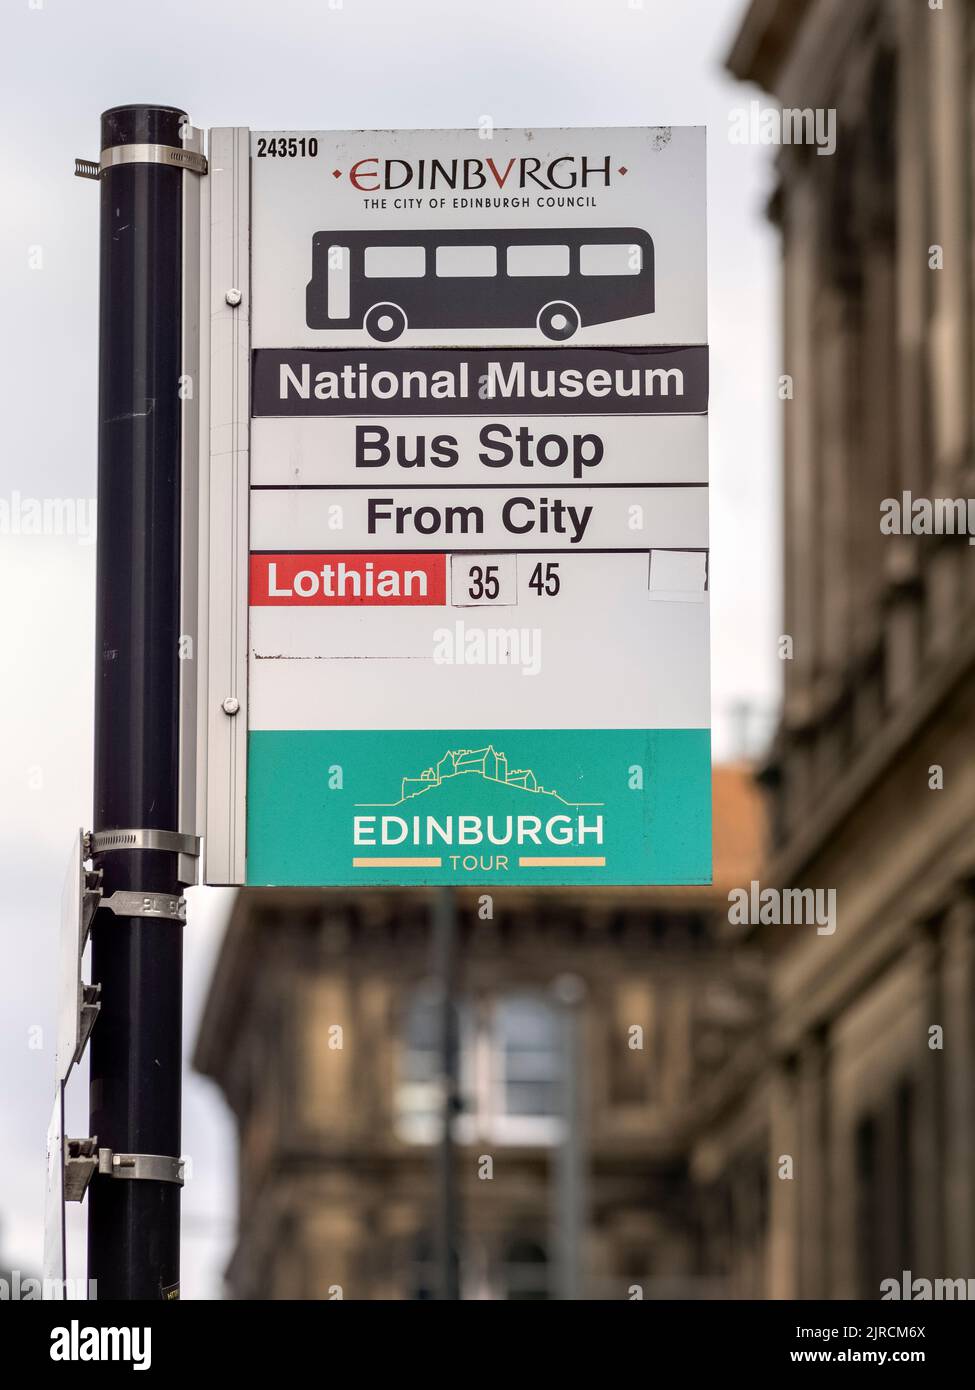 Bus Stop for the National Museum of Scotland, Edinburgh, UK. Stock Photo